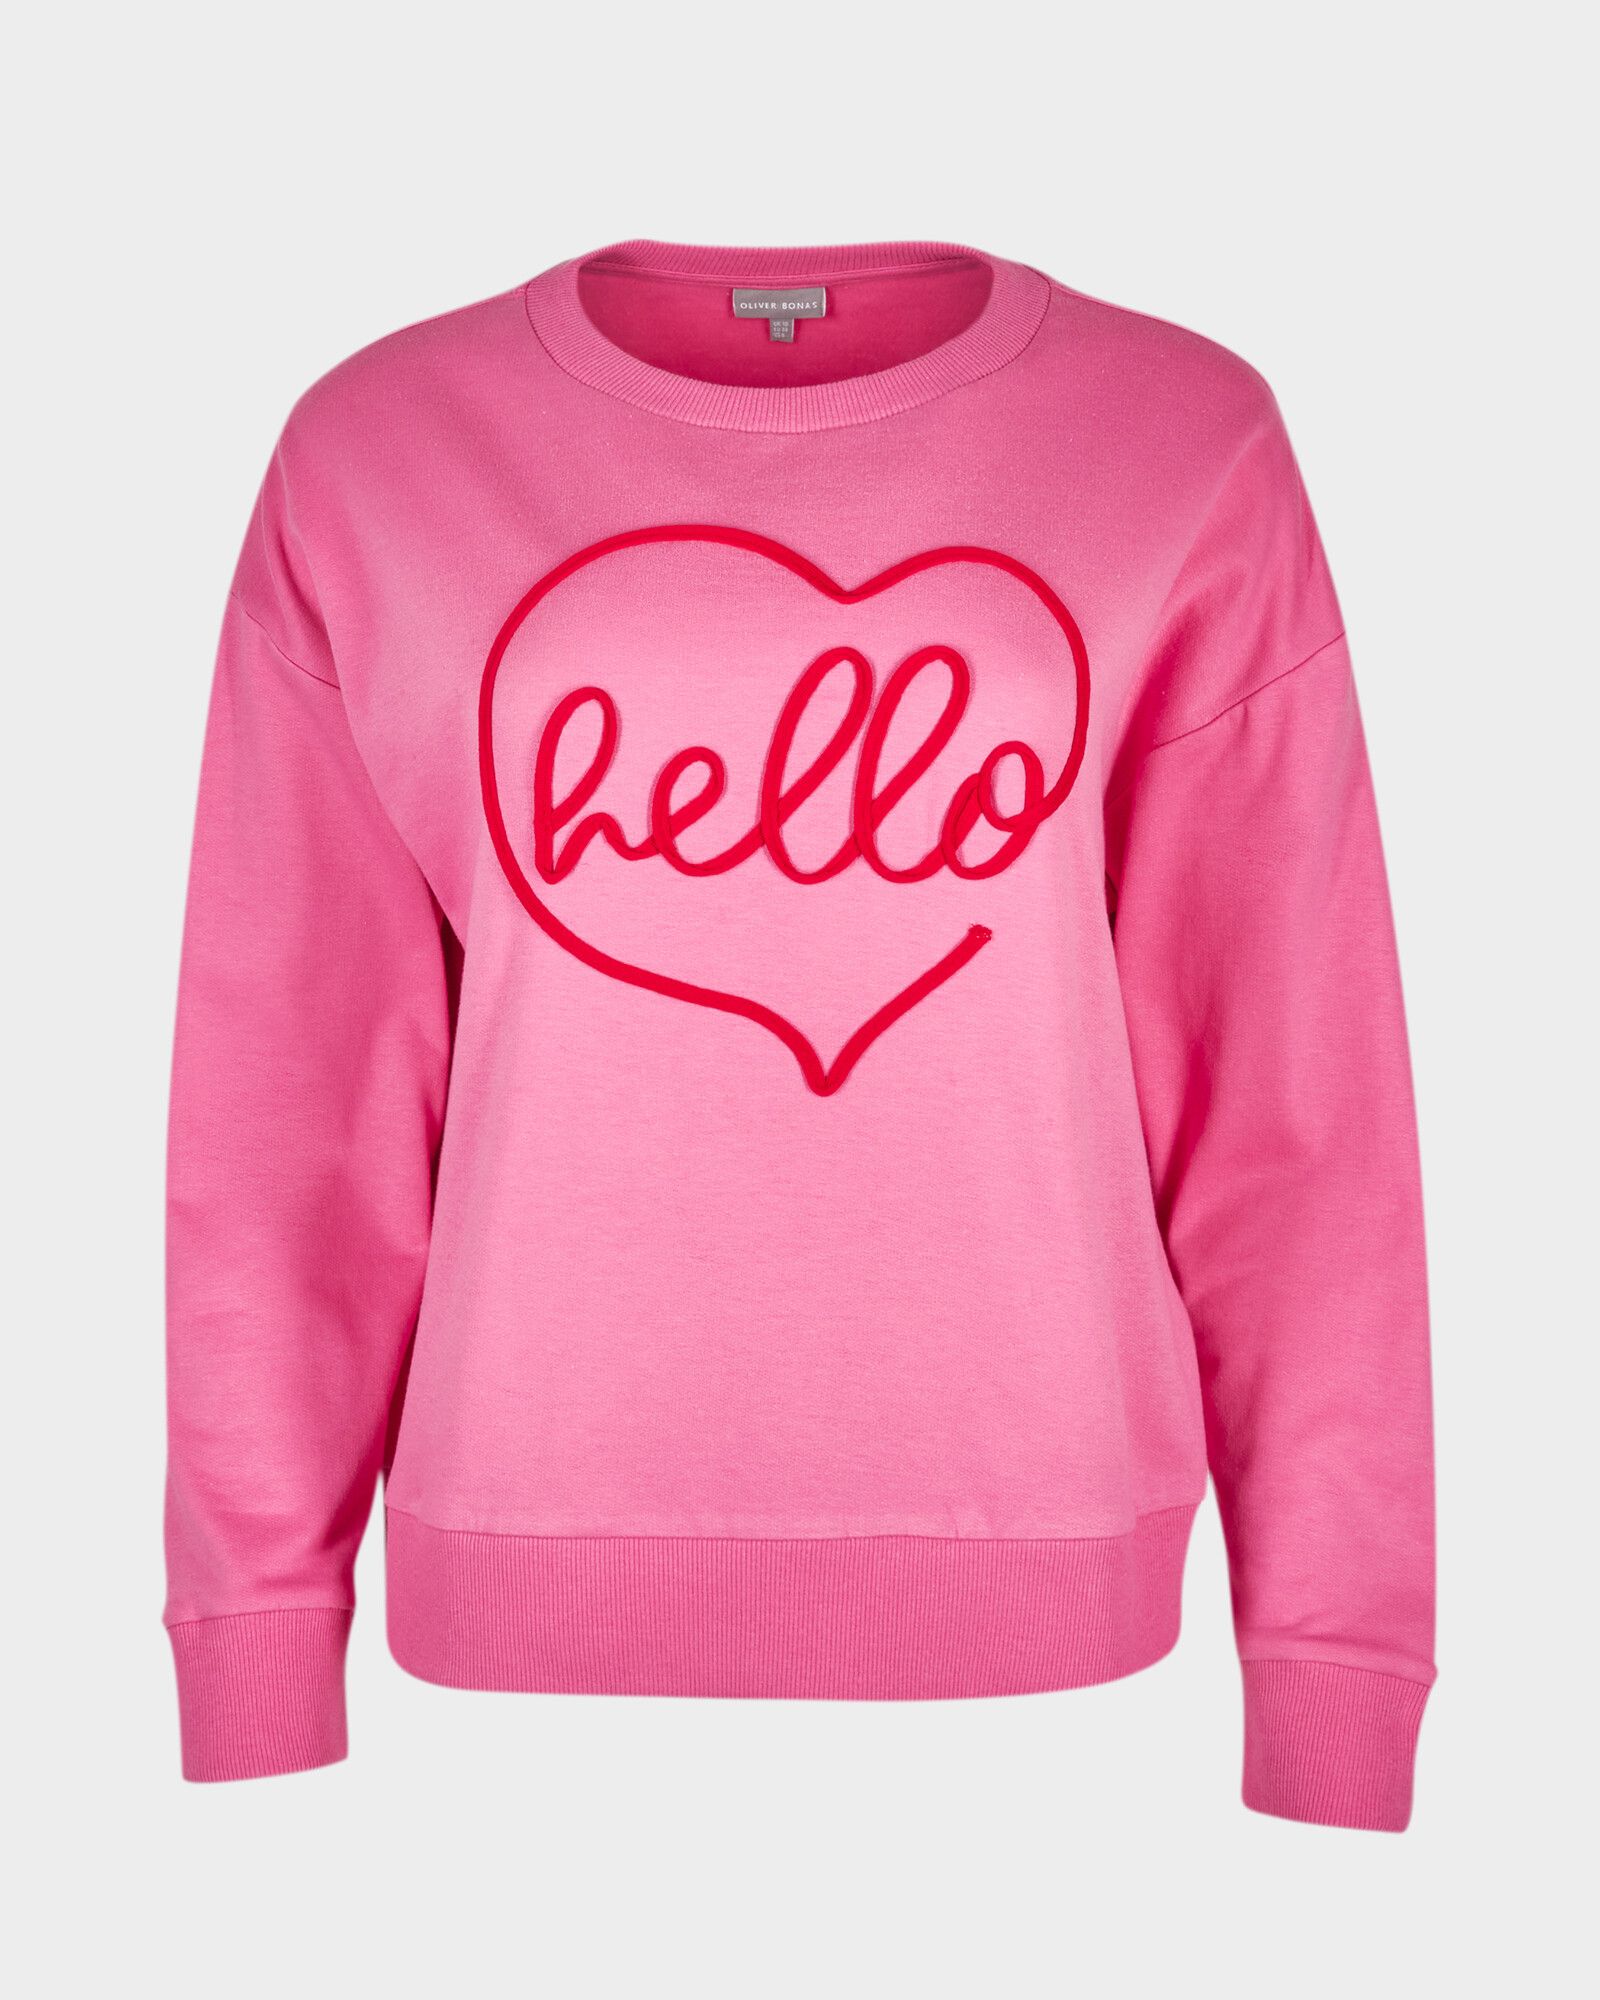 Hello Embroidered Pink Long Sleeved Sweatshirt | Oliver Bonas